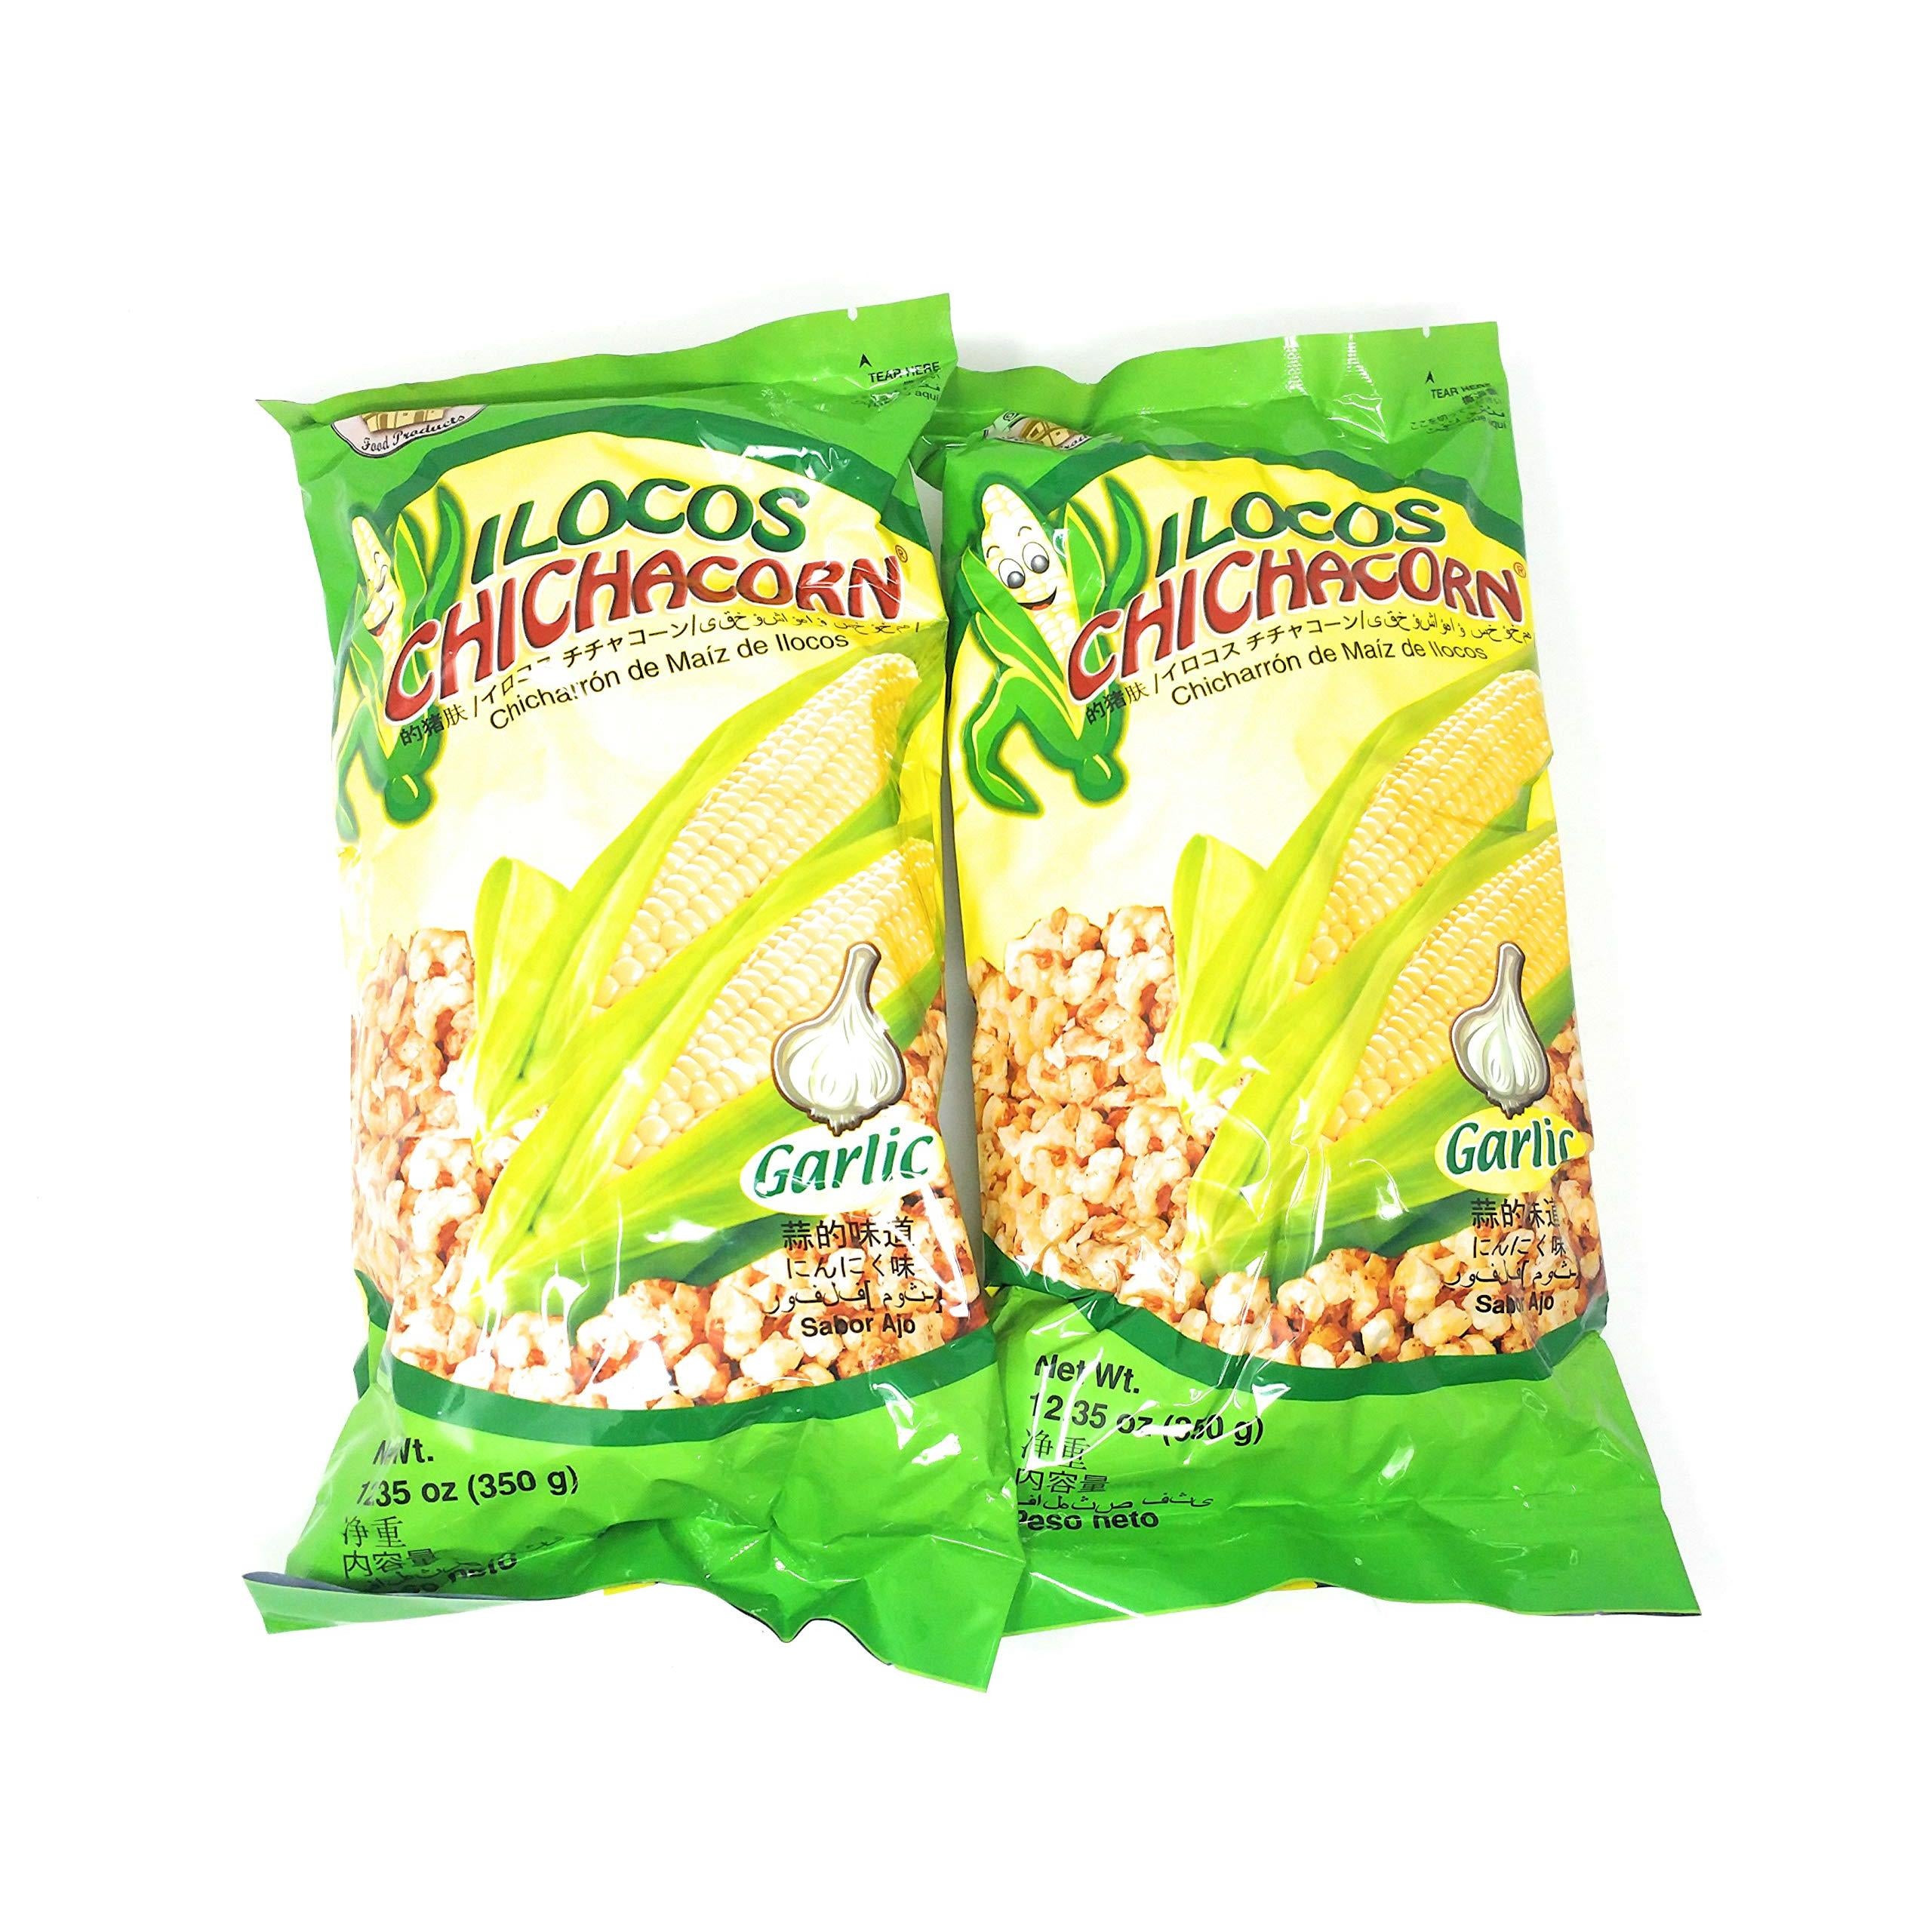 Ilocos Chichacorn Cornick Corn Nuts - Garlic Flavor, 12.35 oz (350g), 2 Pack